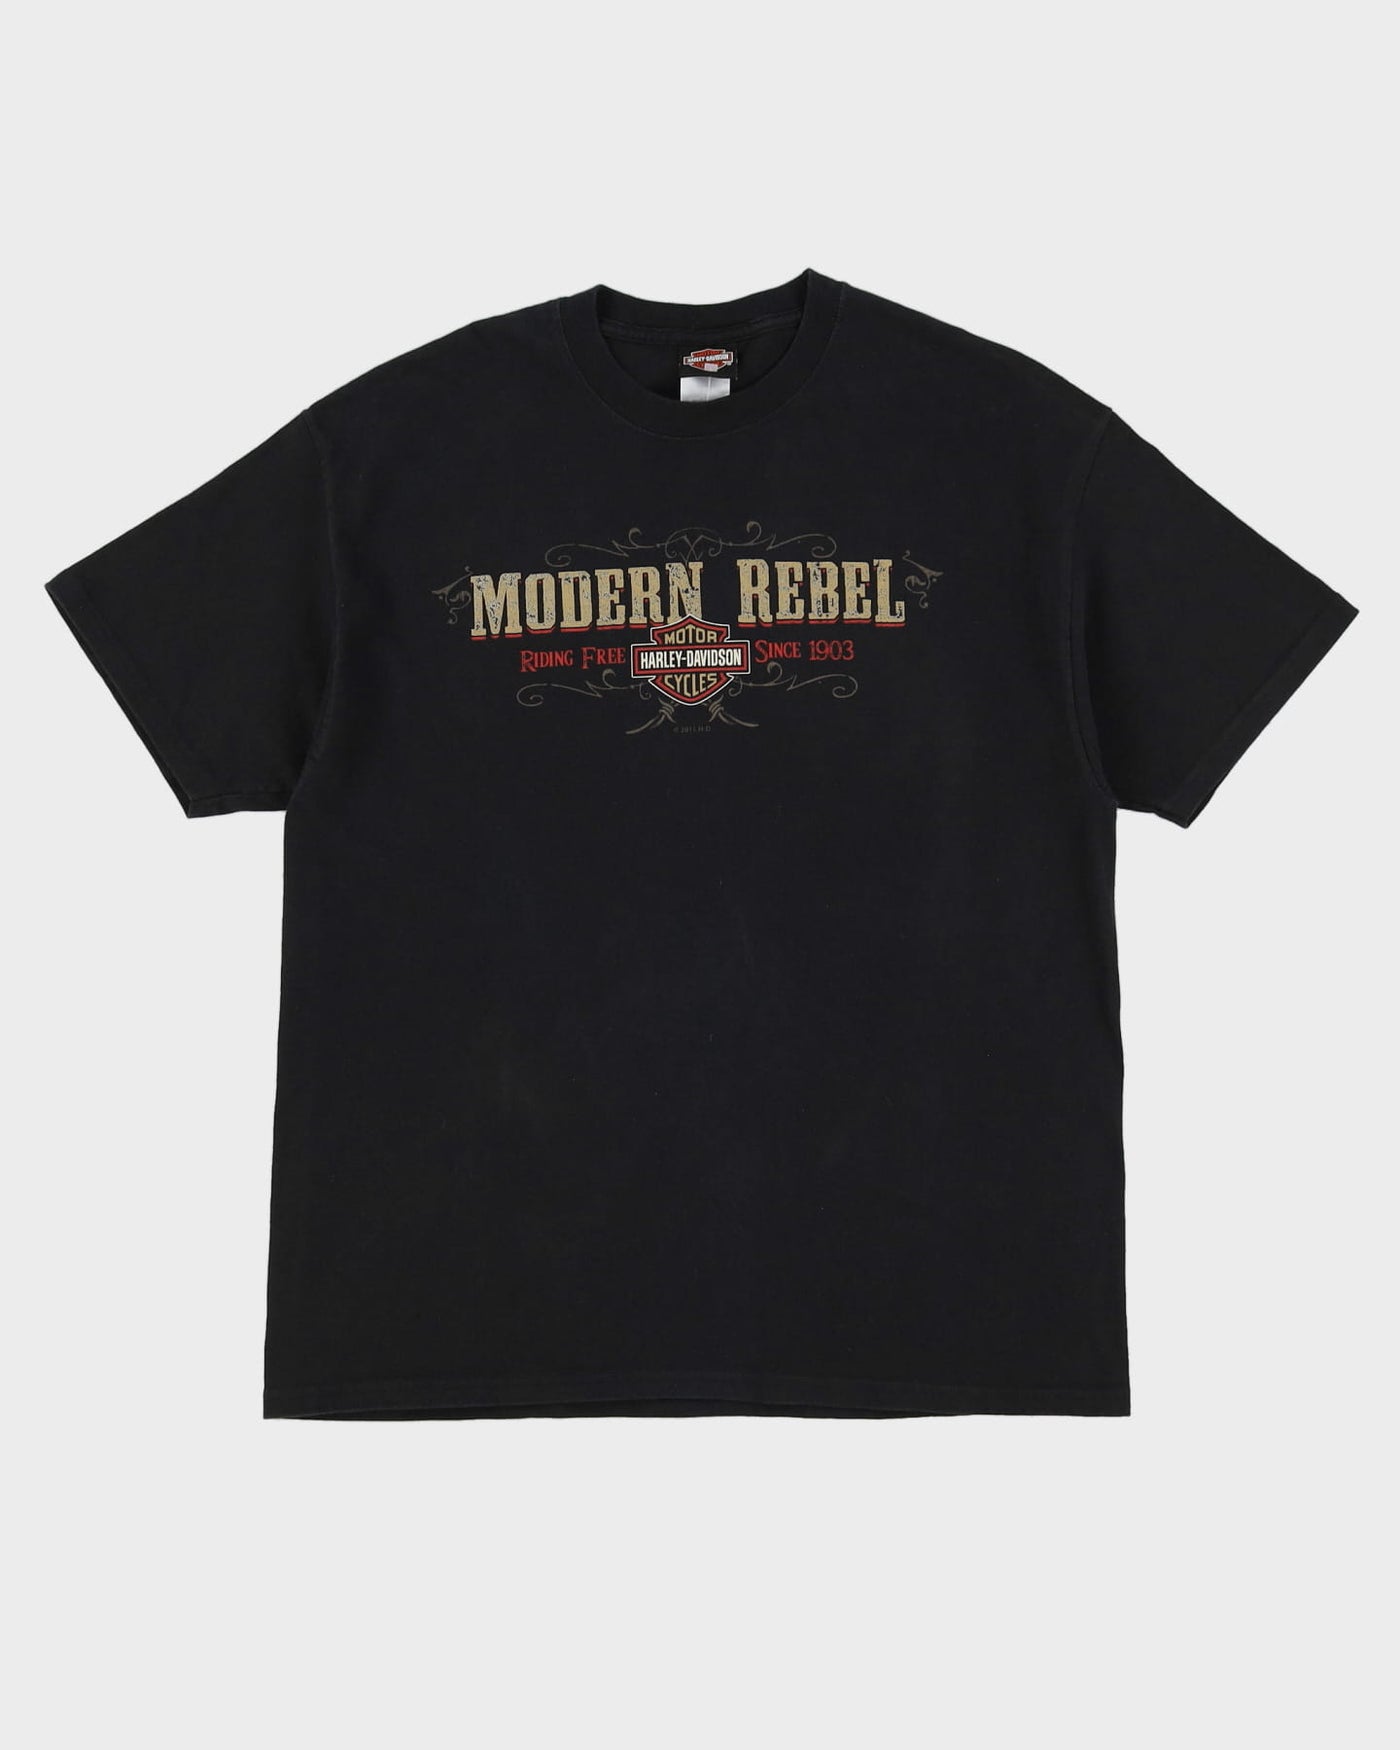 2011 Harley Davidson Modern Rebel Zion Black Graphic T-Shirt - XL